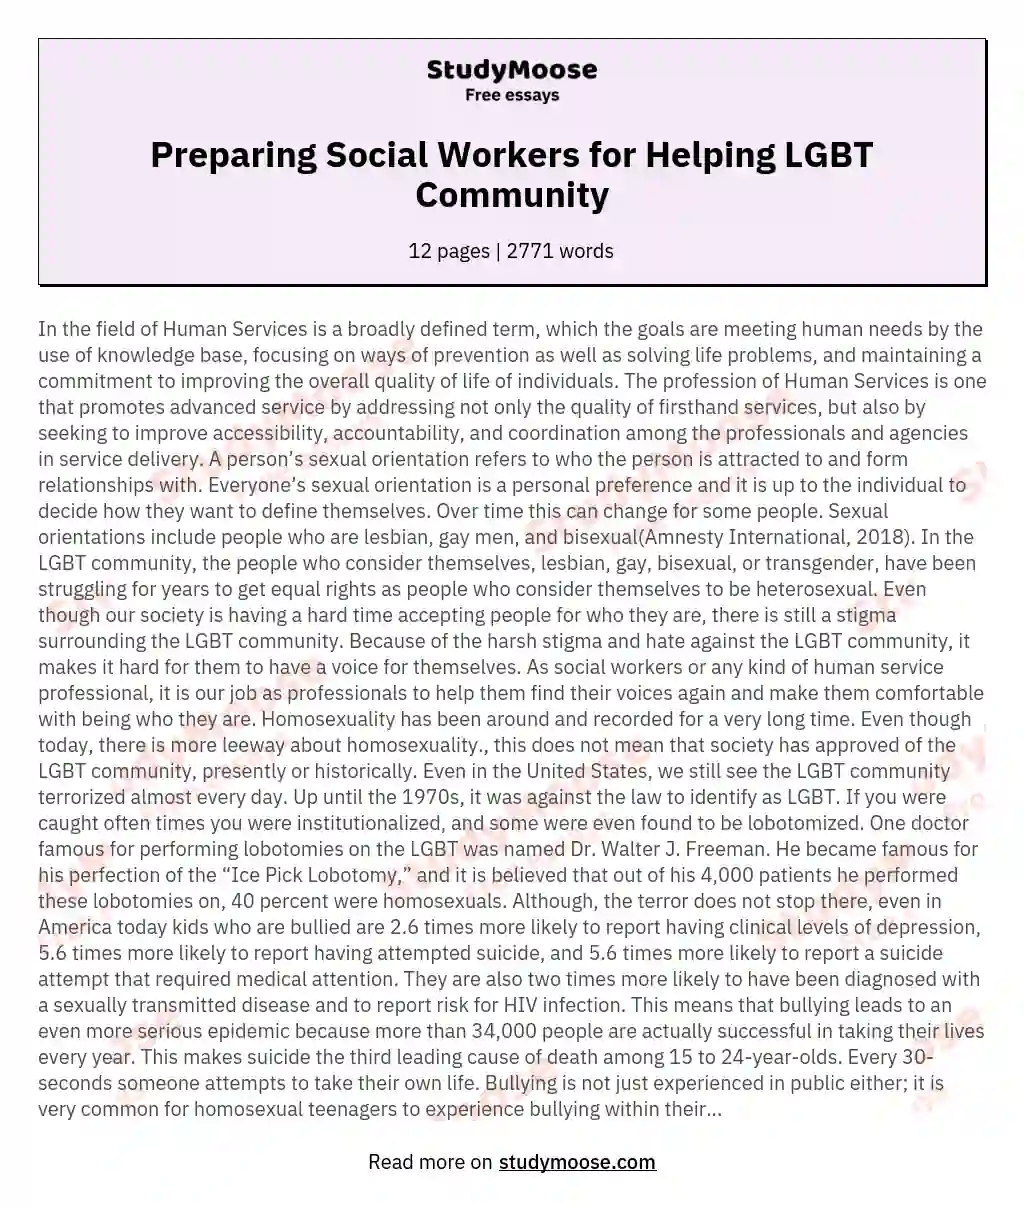 Preparing Social Workers for Helping LGBT Community